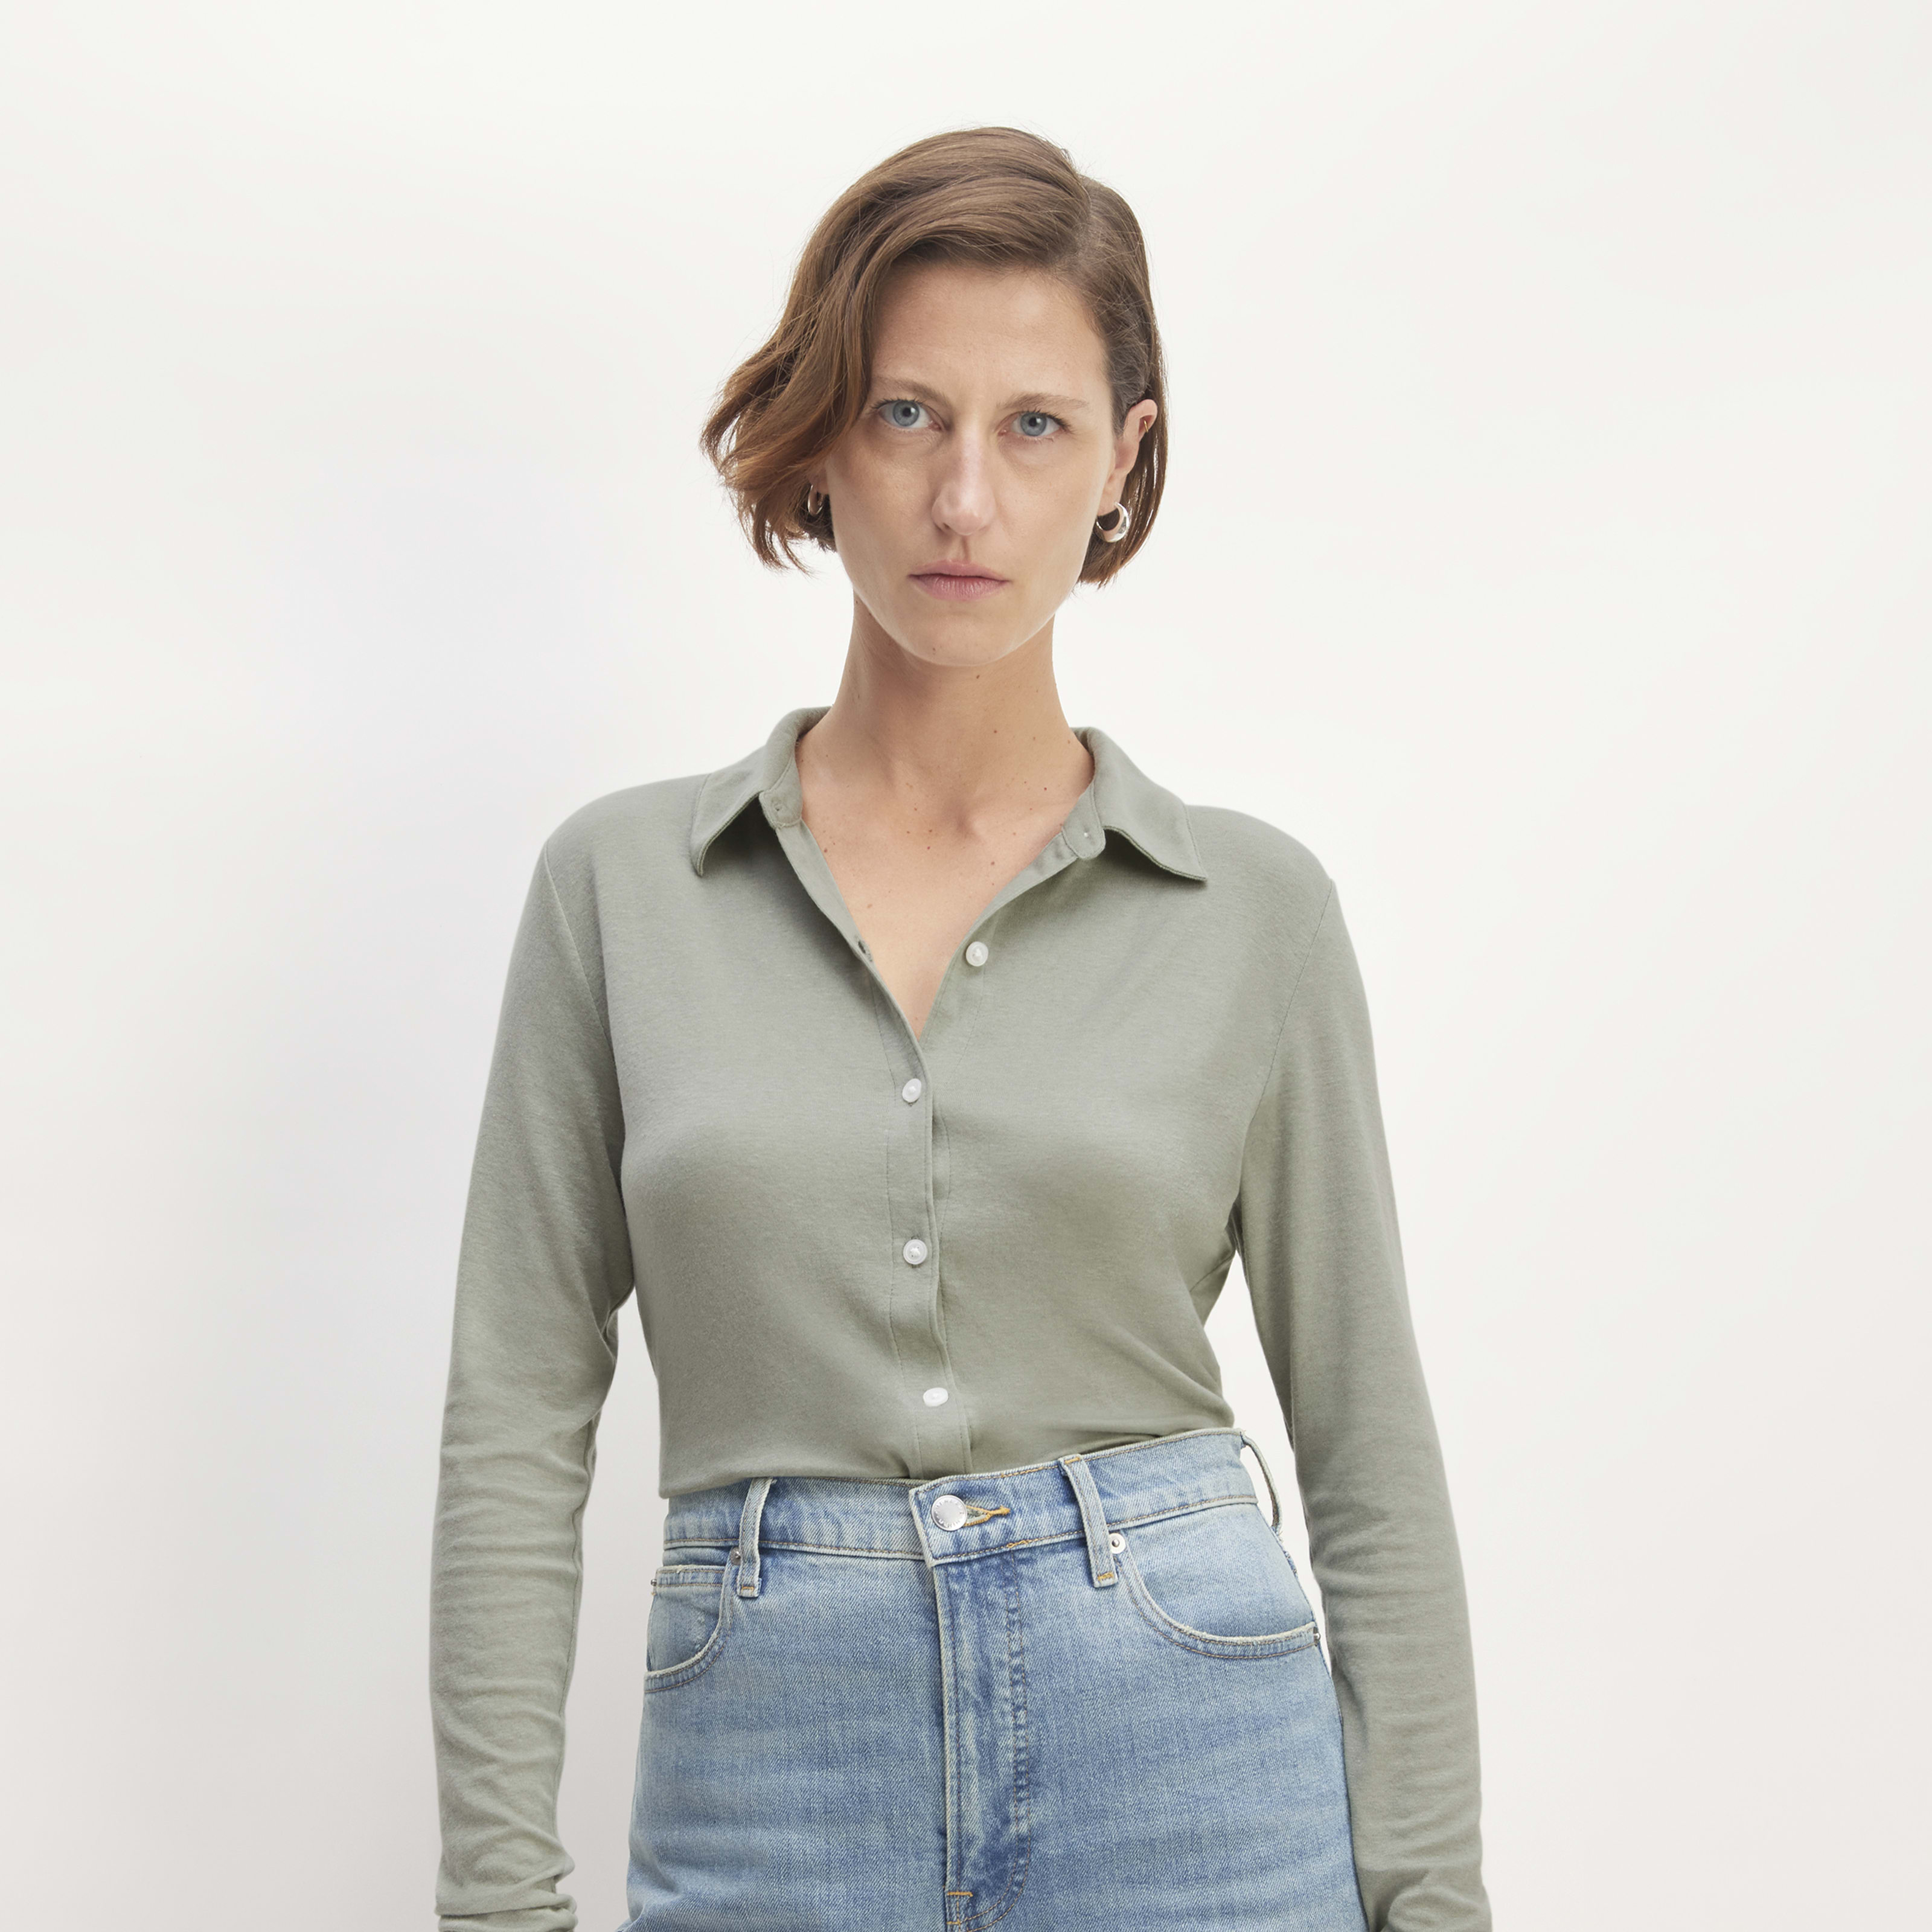 women's merino tencelâ„¢ relaxed shirt by everlane in sage green, size xxs